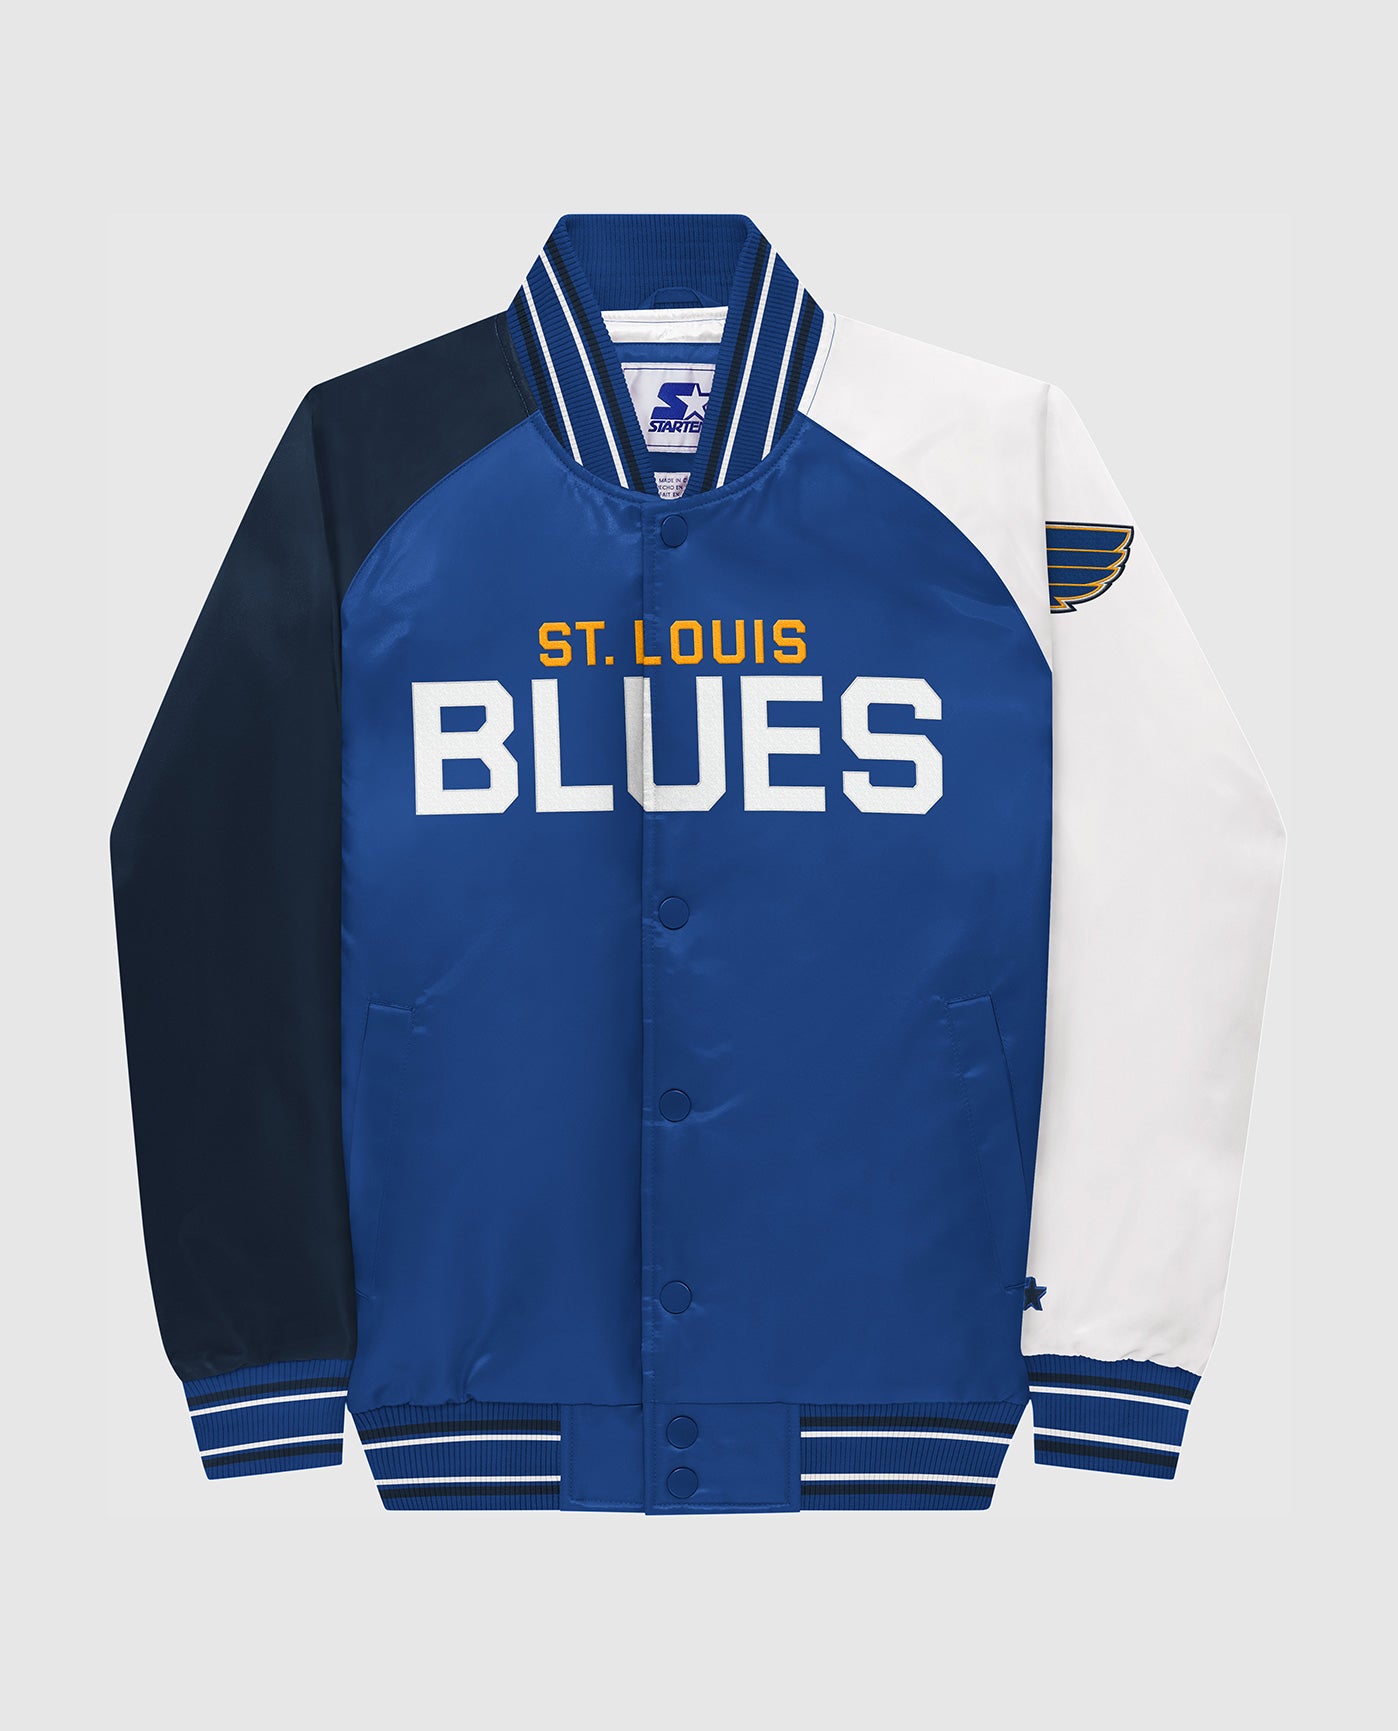 St Louis Blues Jersey Mens Starter fashion Retro black NHL Hockey Jersey L